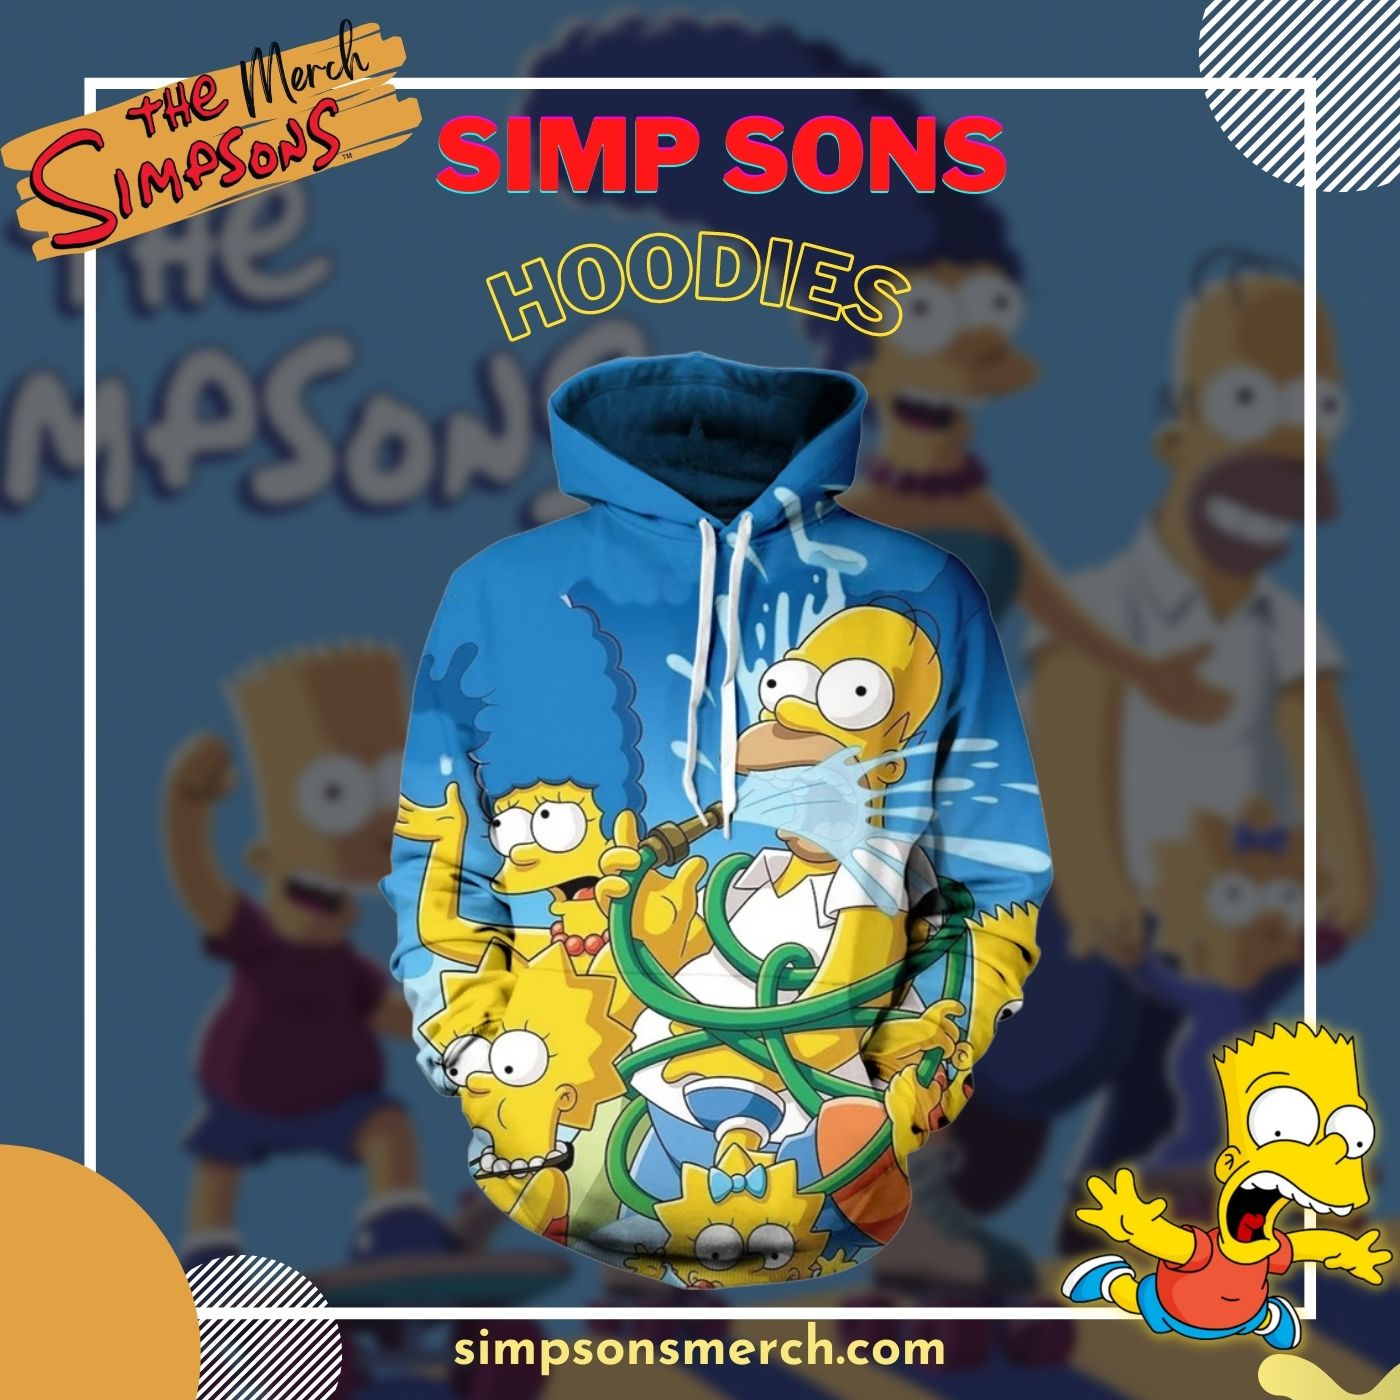 Simp Sons Hoodies 1 - The Simpsons Shop